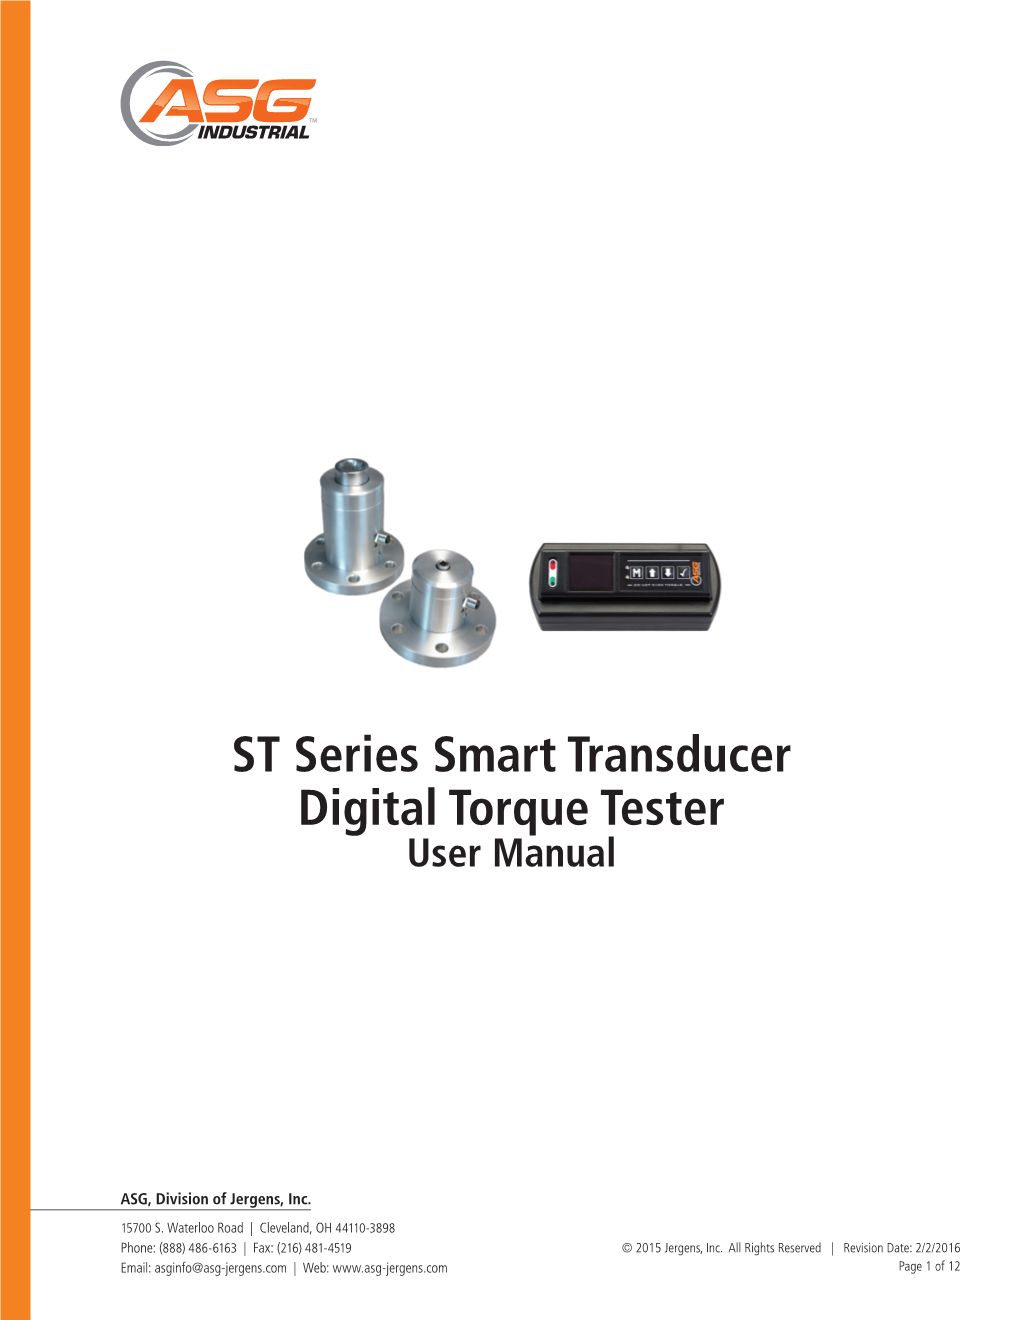 ST Series Smart Transducer Digital Torque Tester User Manual